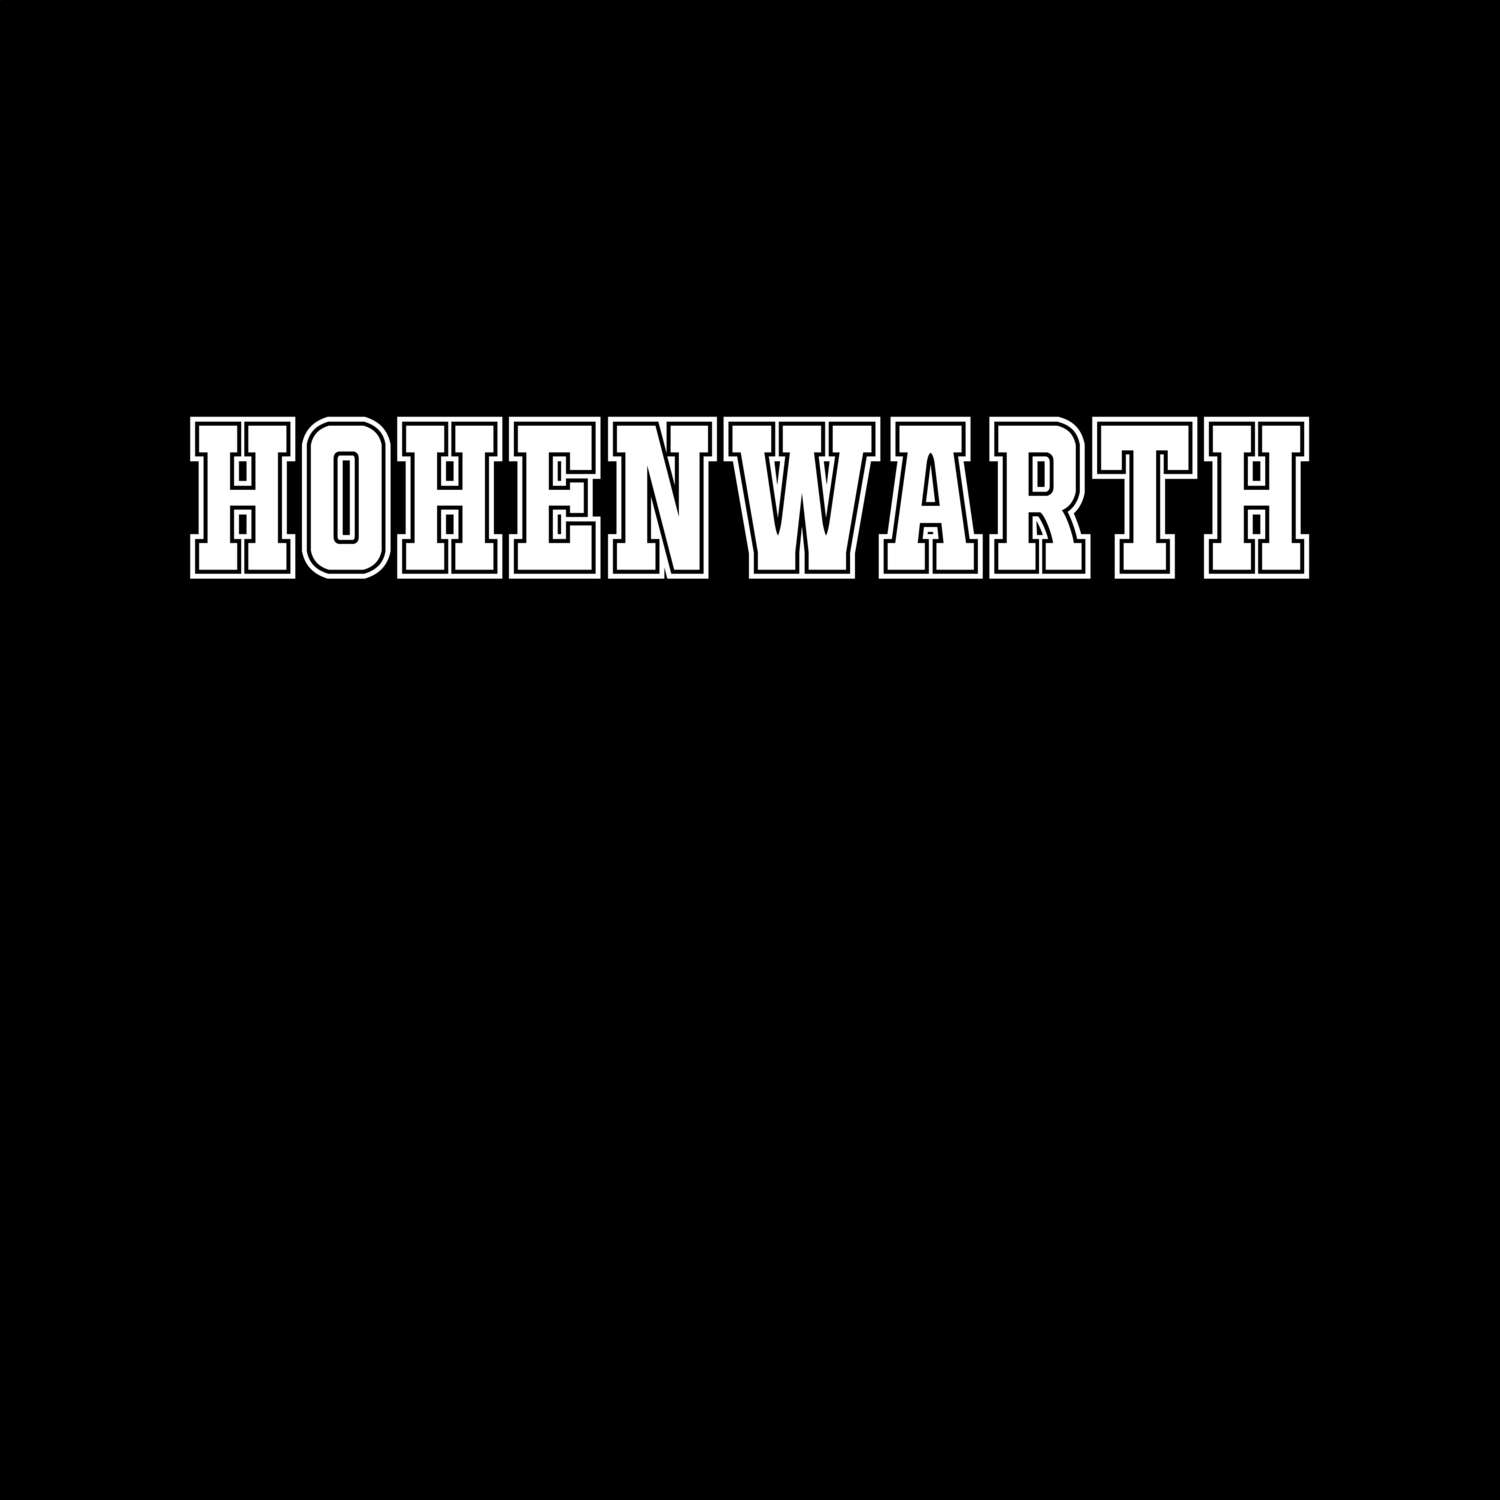 Hohenwarth T-Shirt »Classic«